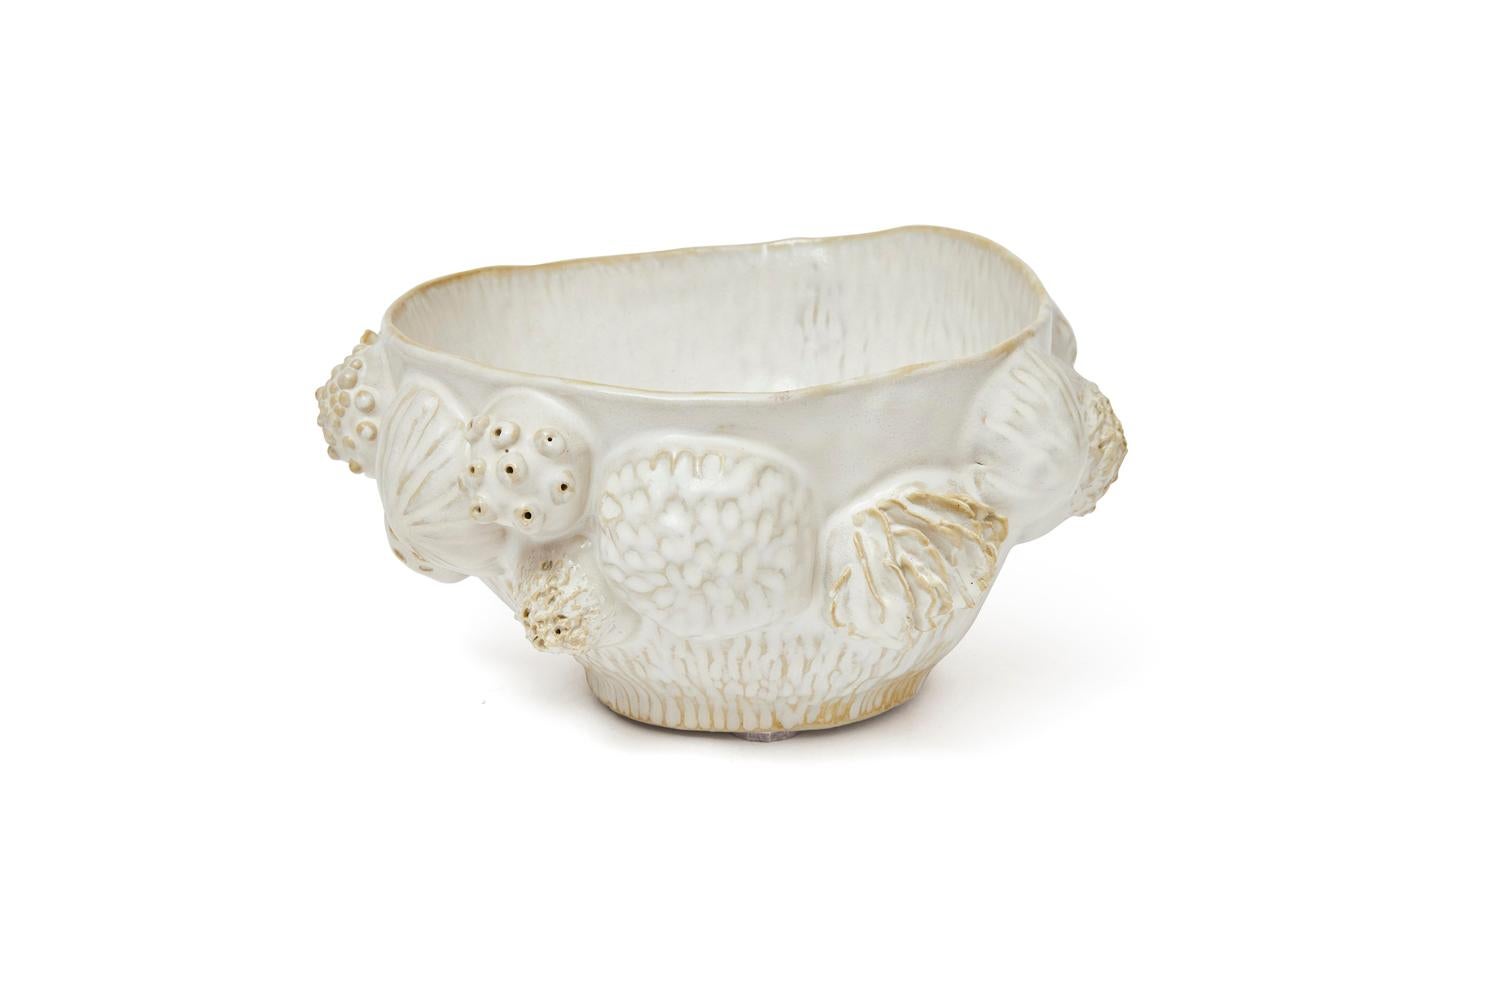 Trish DeMasi
Botanica bowl, 2021
Glazed ceramic
Measures: 5.5 x 11.25 x 10.5 in.